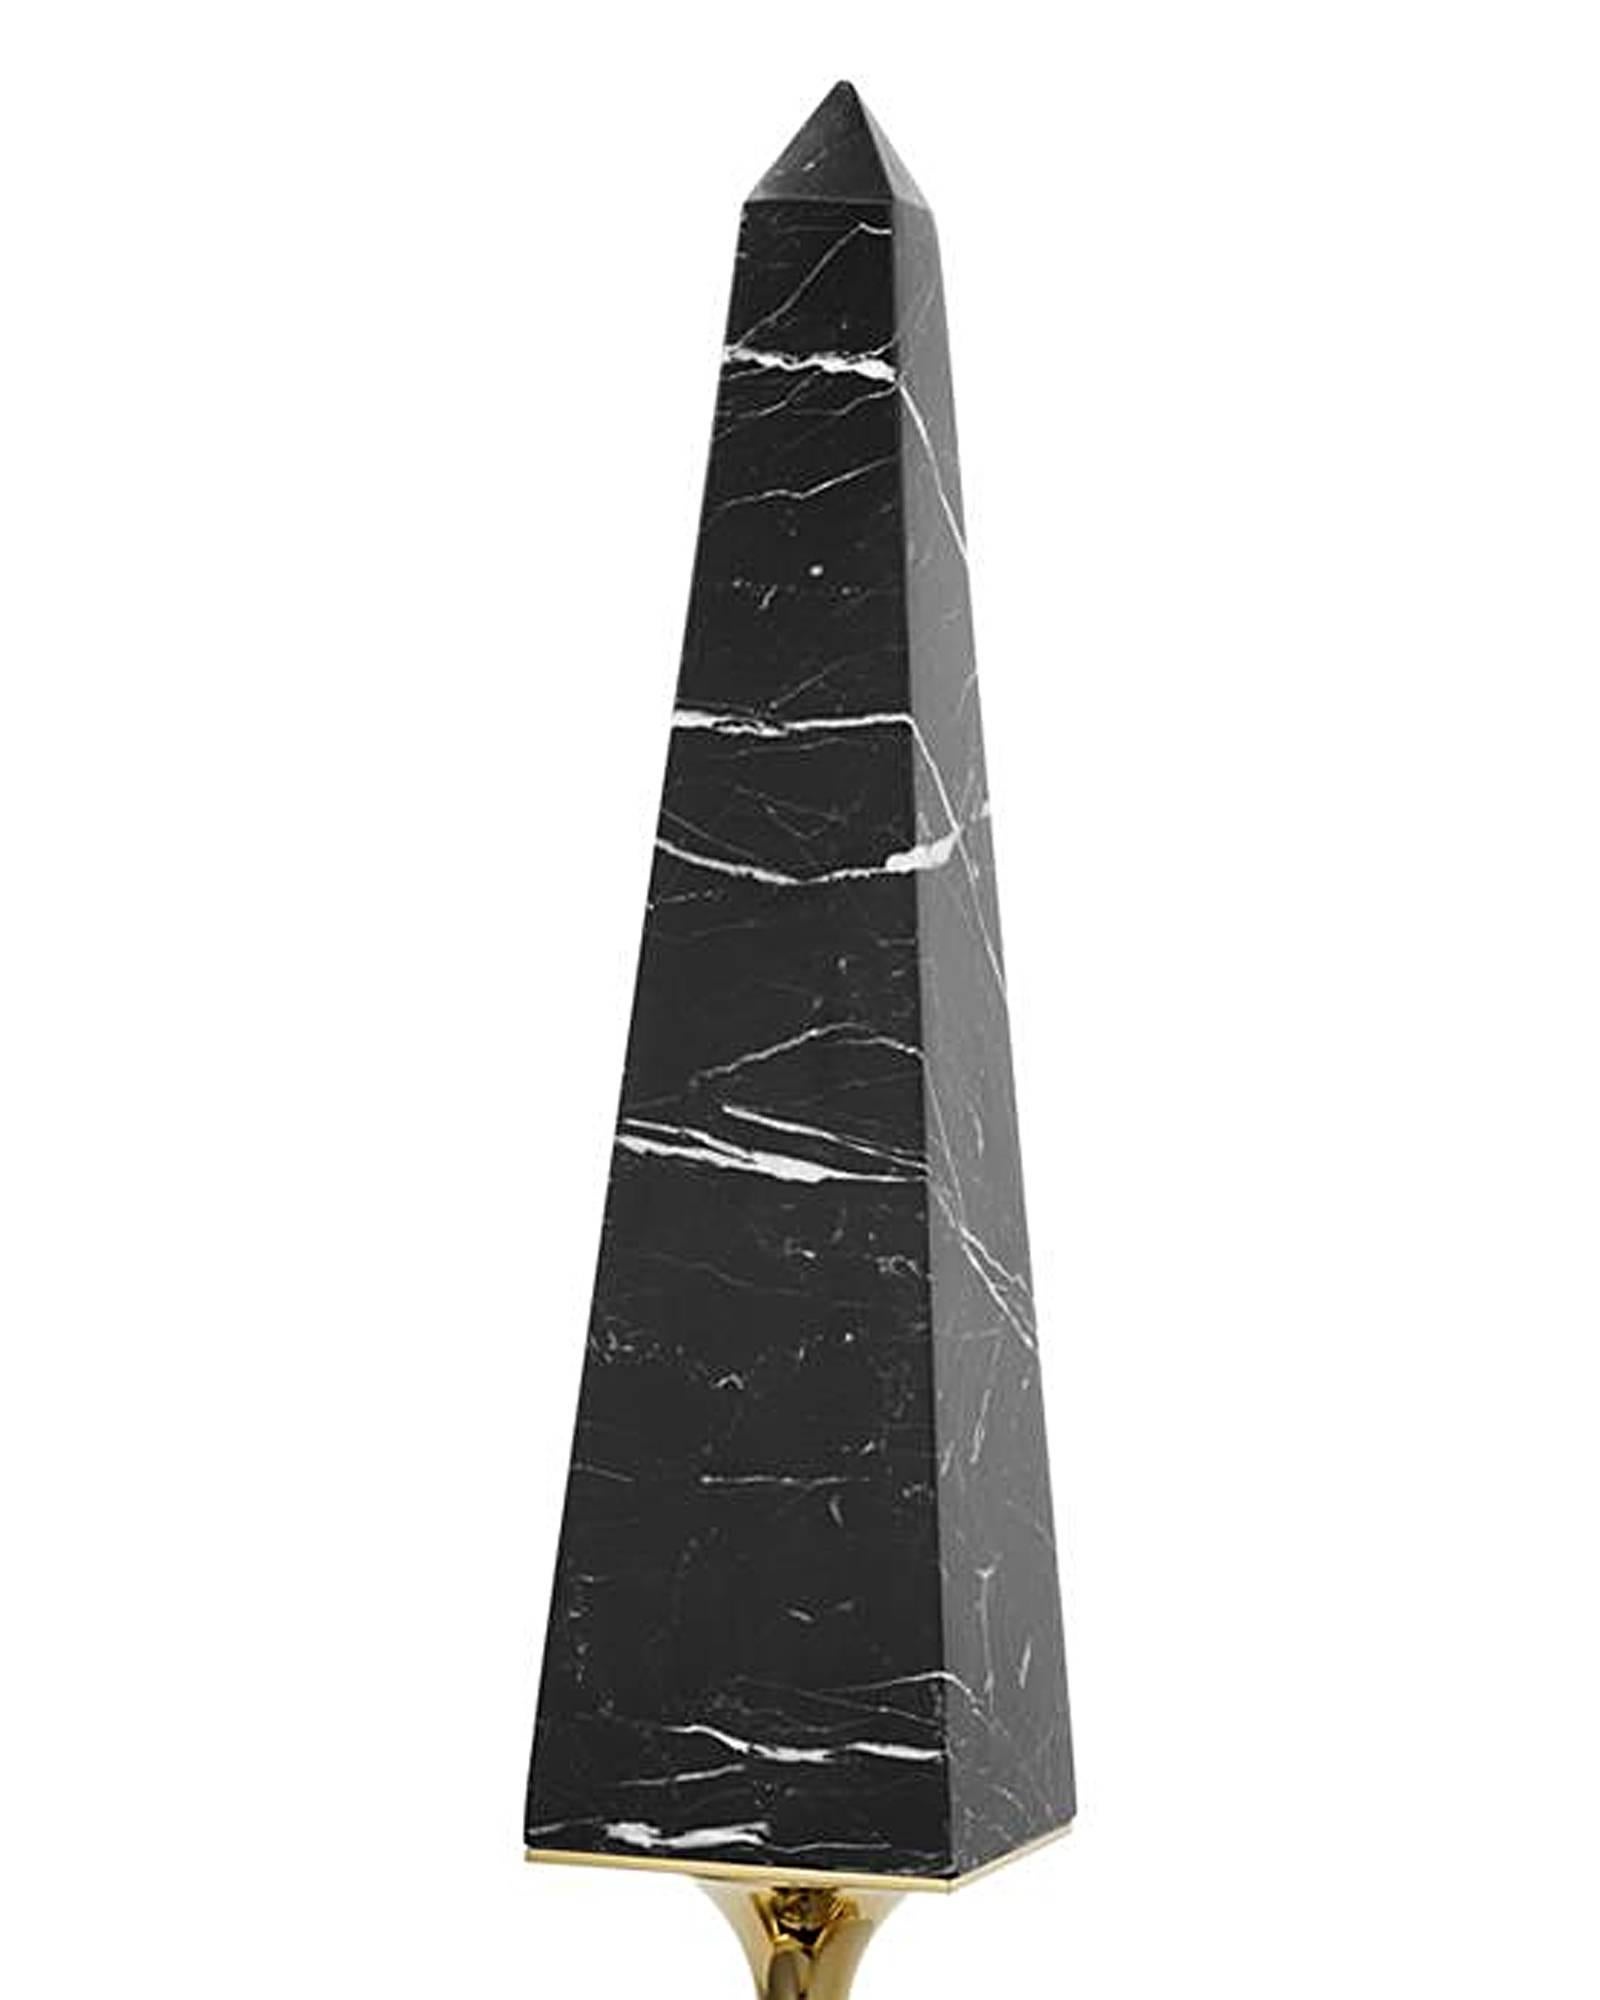 Obelisk phoenix in black marble on
Gold finish base. Available on black
marble on nickel finish base.
